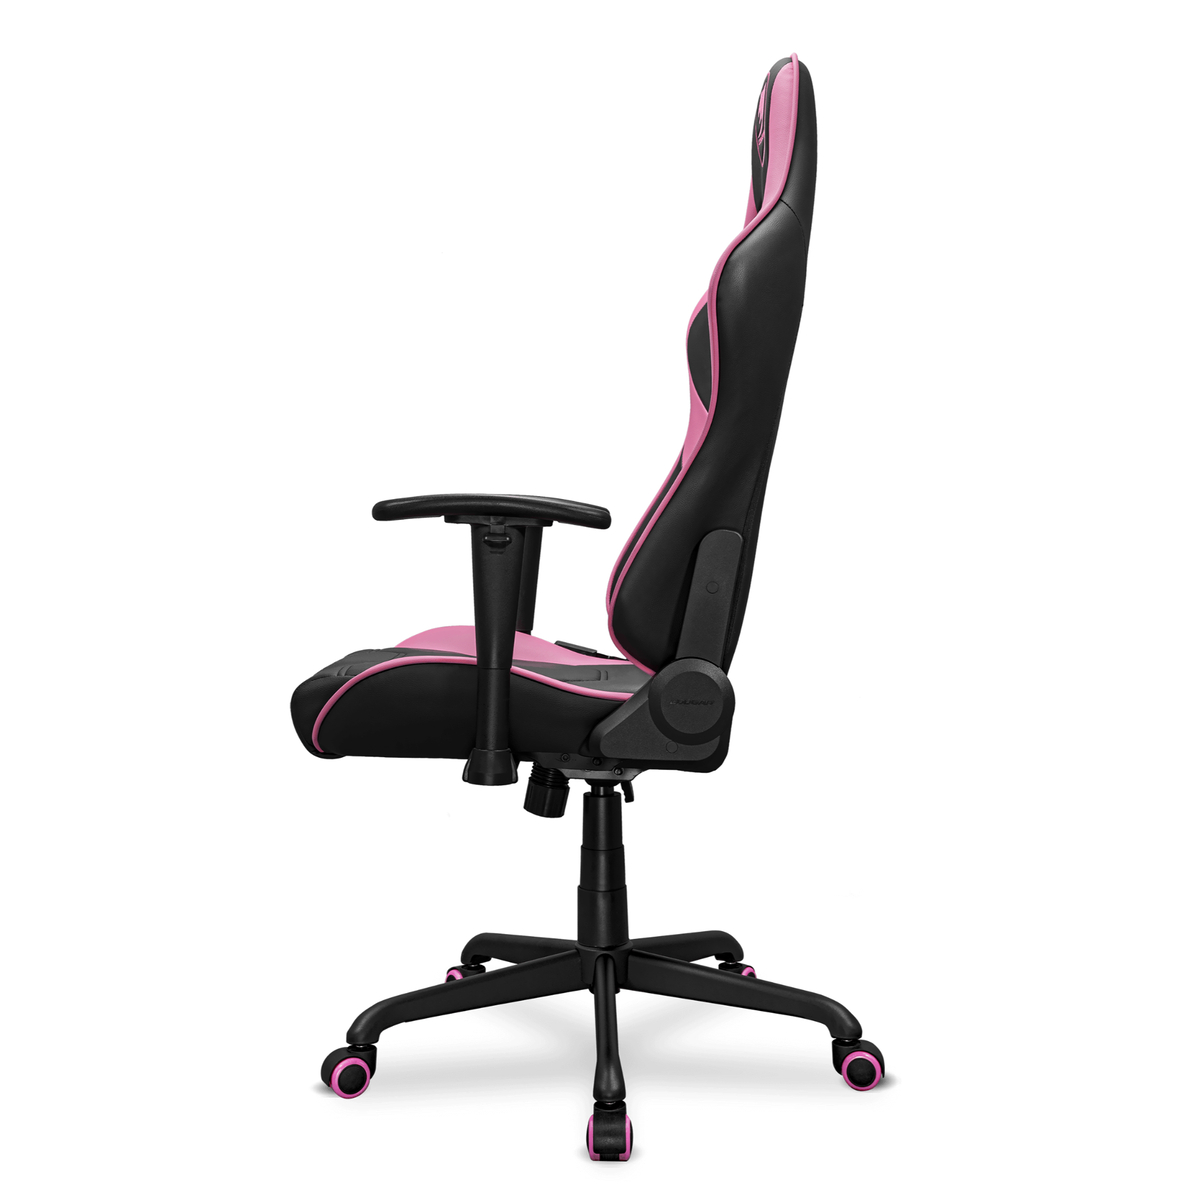 Cougar Fully Adjustable Gaming Chair, Eva, CG-CHAIR-ARMOR-ELITE-EVA